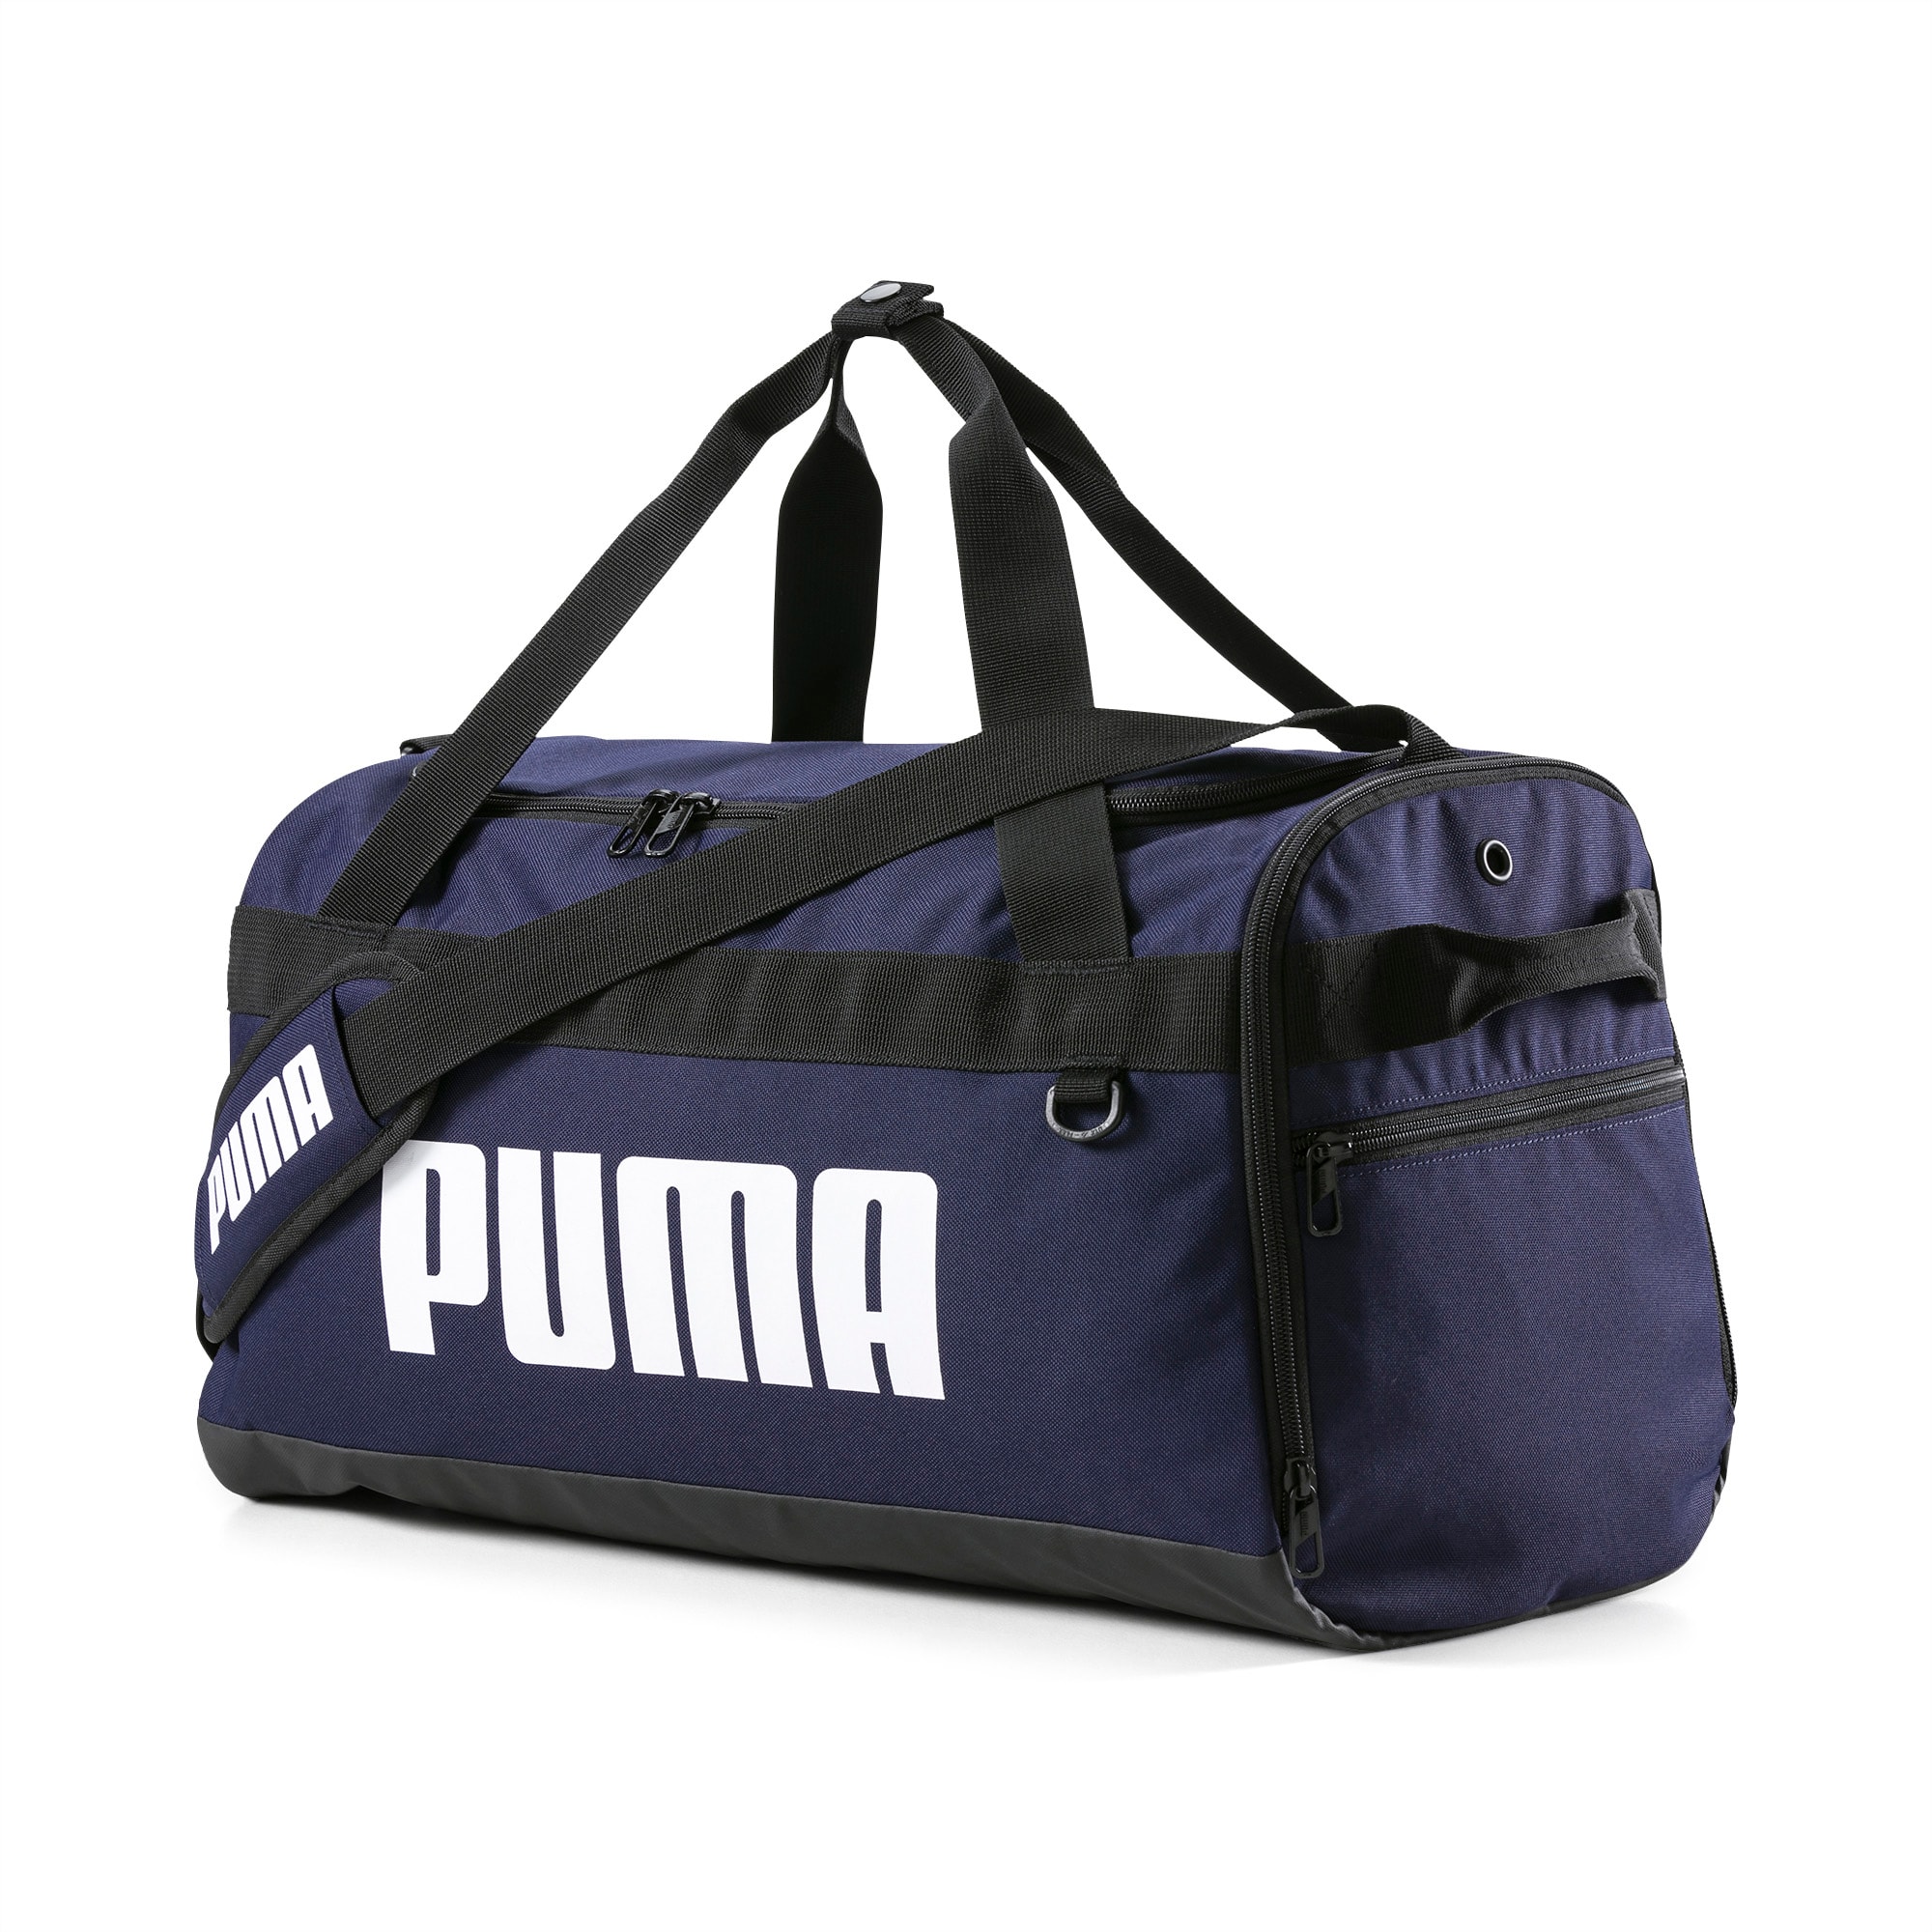 puma bags online sale india